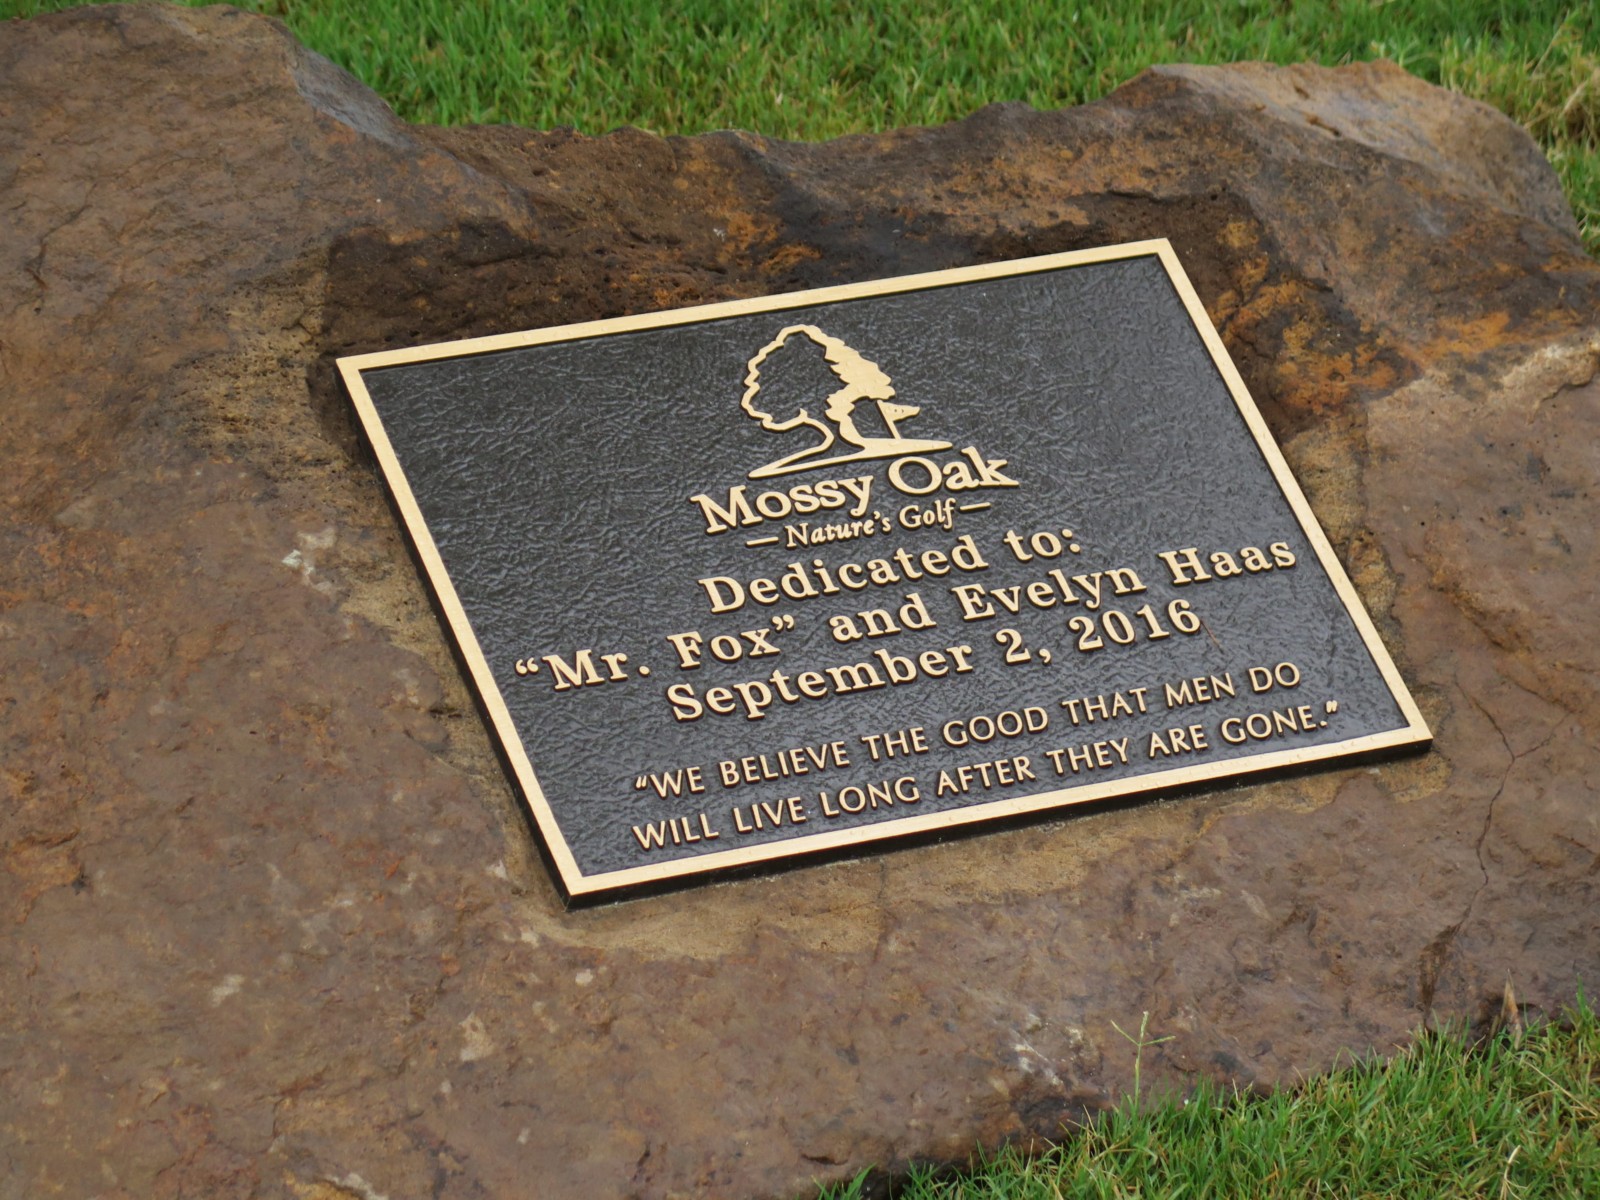 mossy oak nature's golf dedication plaque